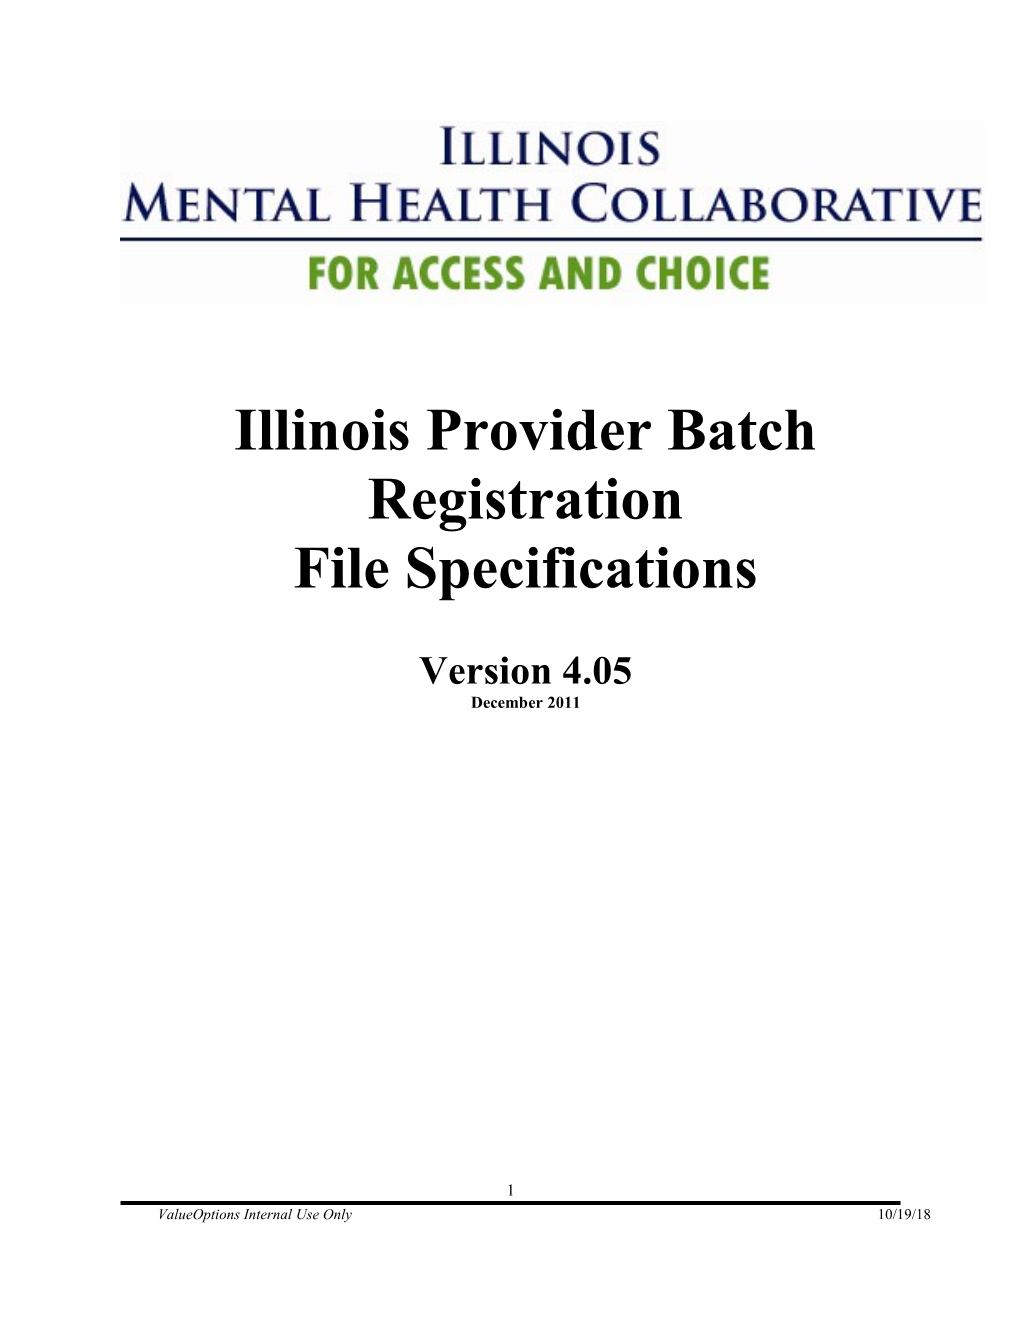 Illinois Provider Batch Registration